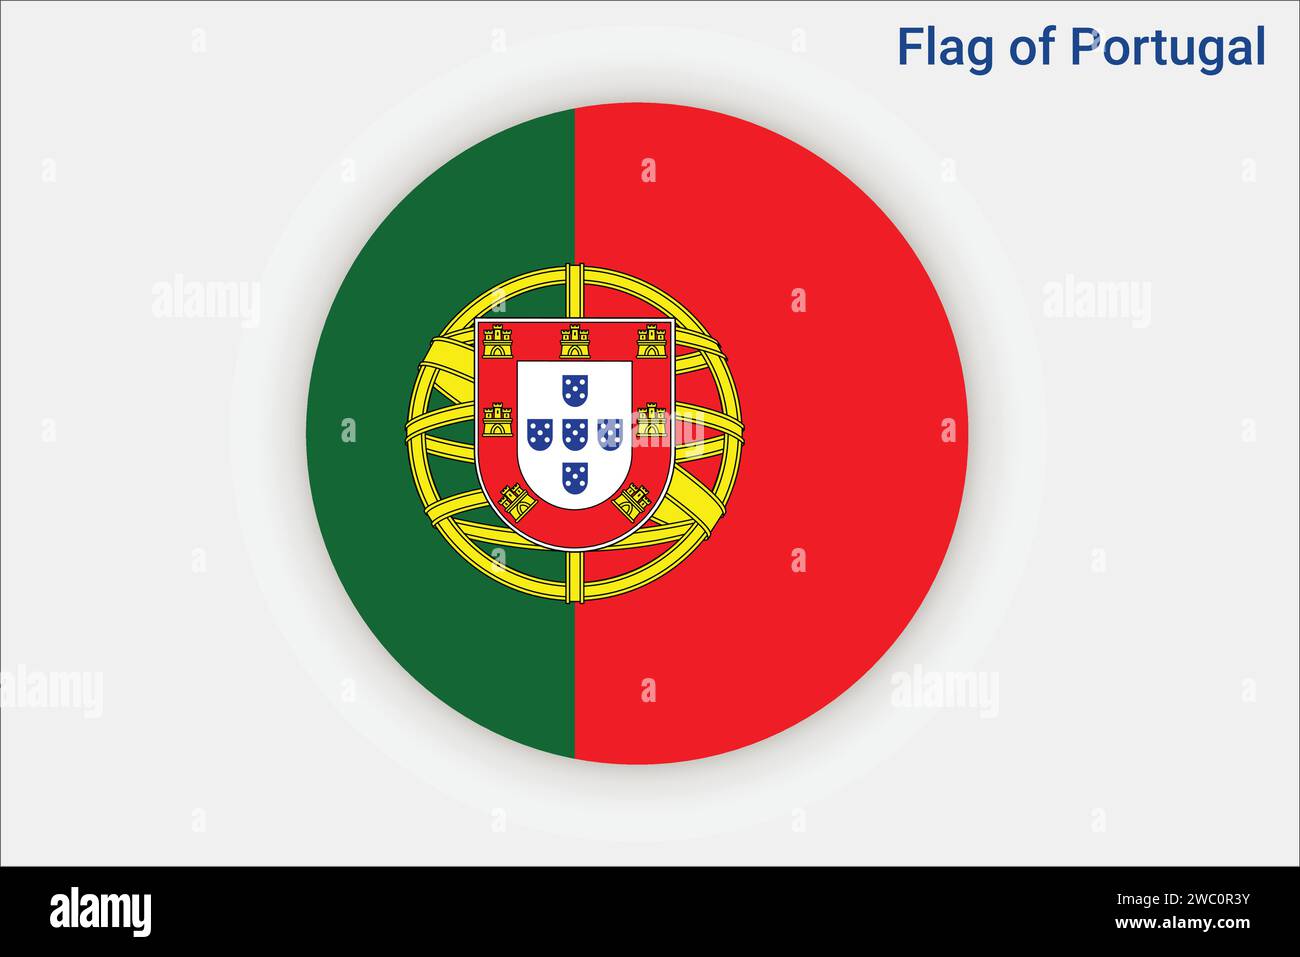 Hochdetaillierte Flagge Portugals. Portugiesische Nationalflagge. Afrika. Europa. 3D-Abbildung. Stock Vektor